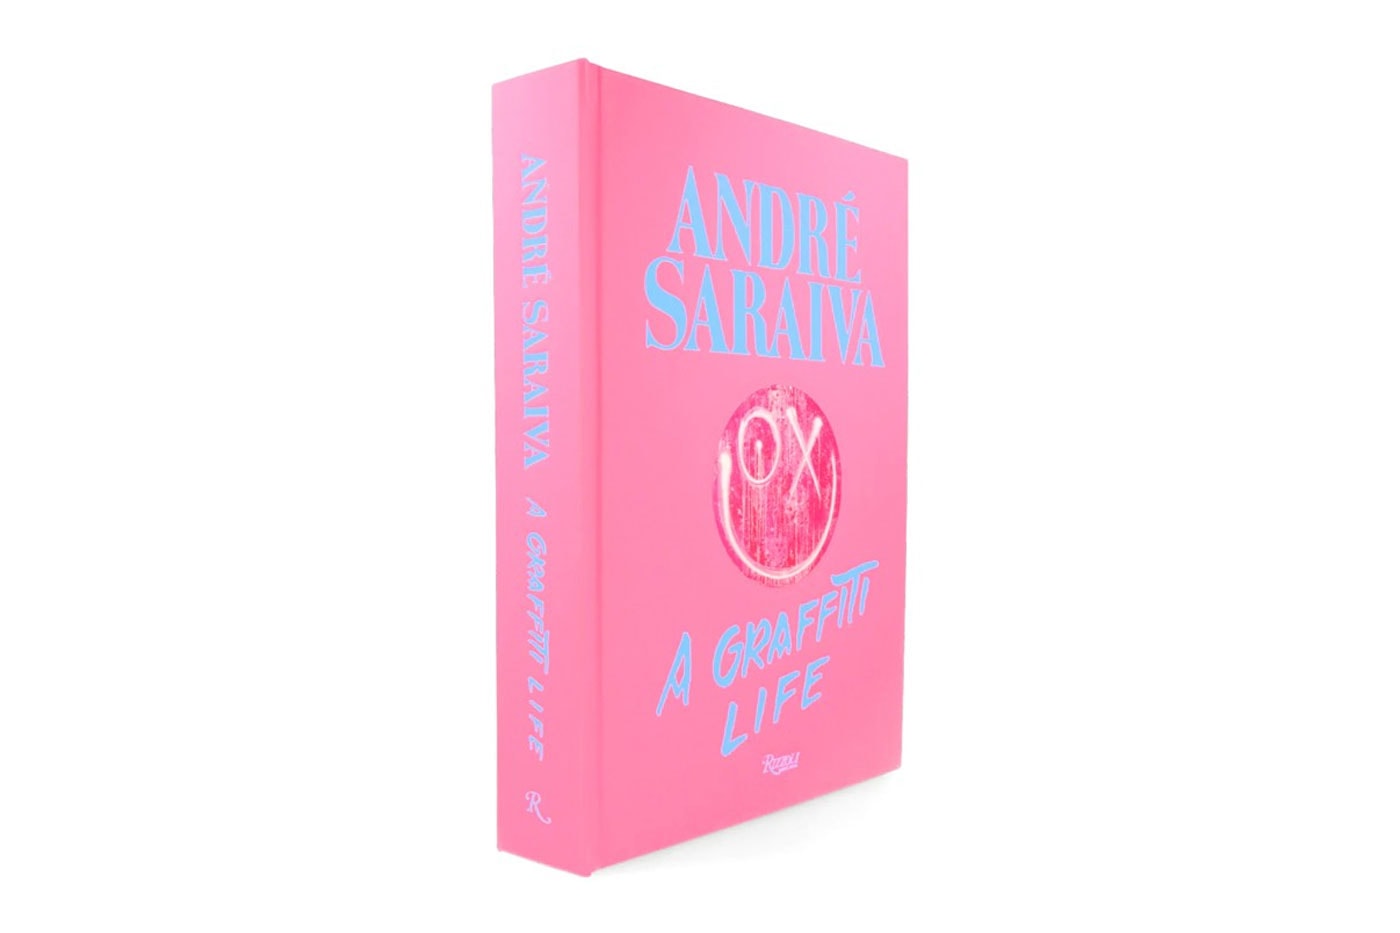 'André Saraiva: Graffiti Life' Rizzoli Art Book